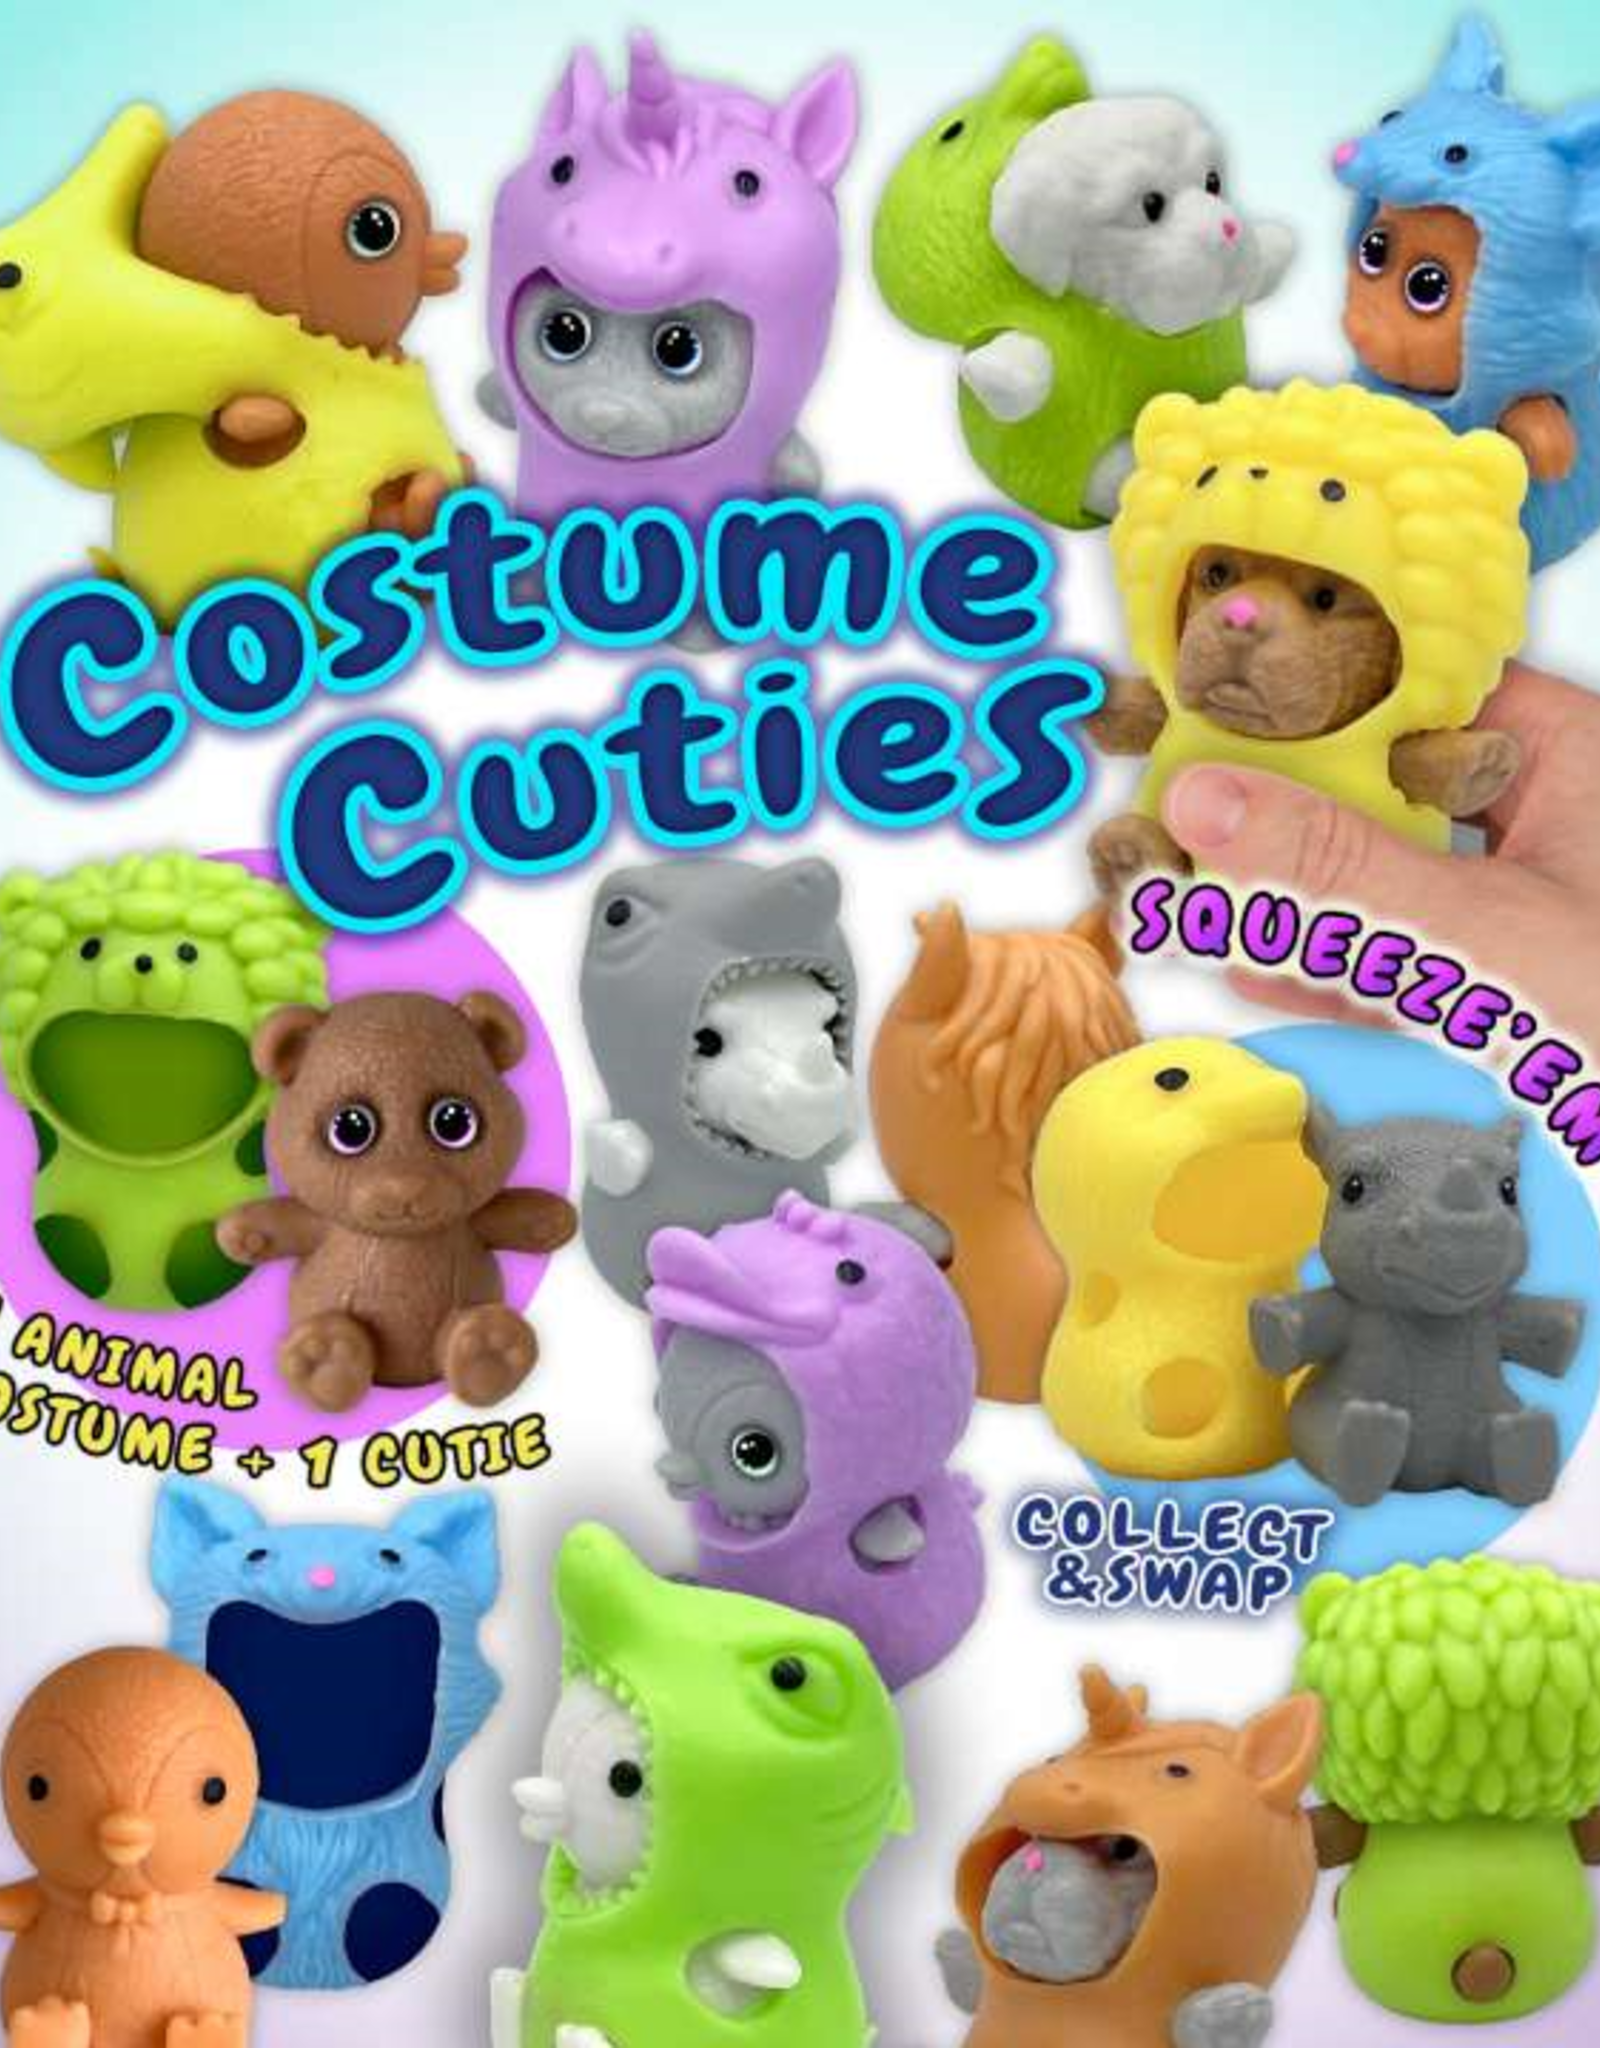 Costume cuties